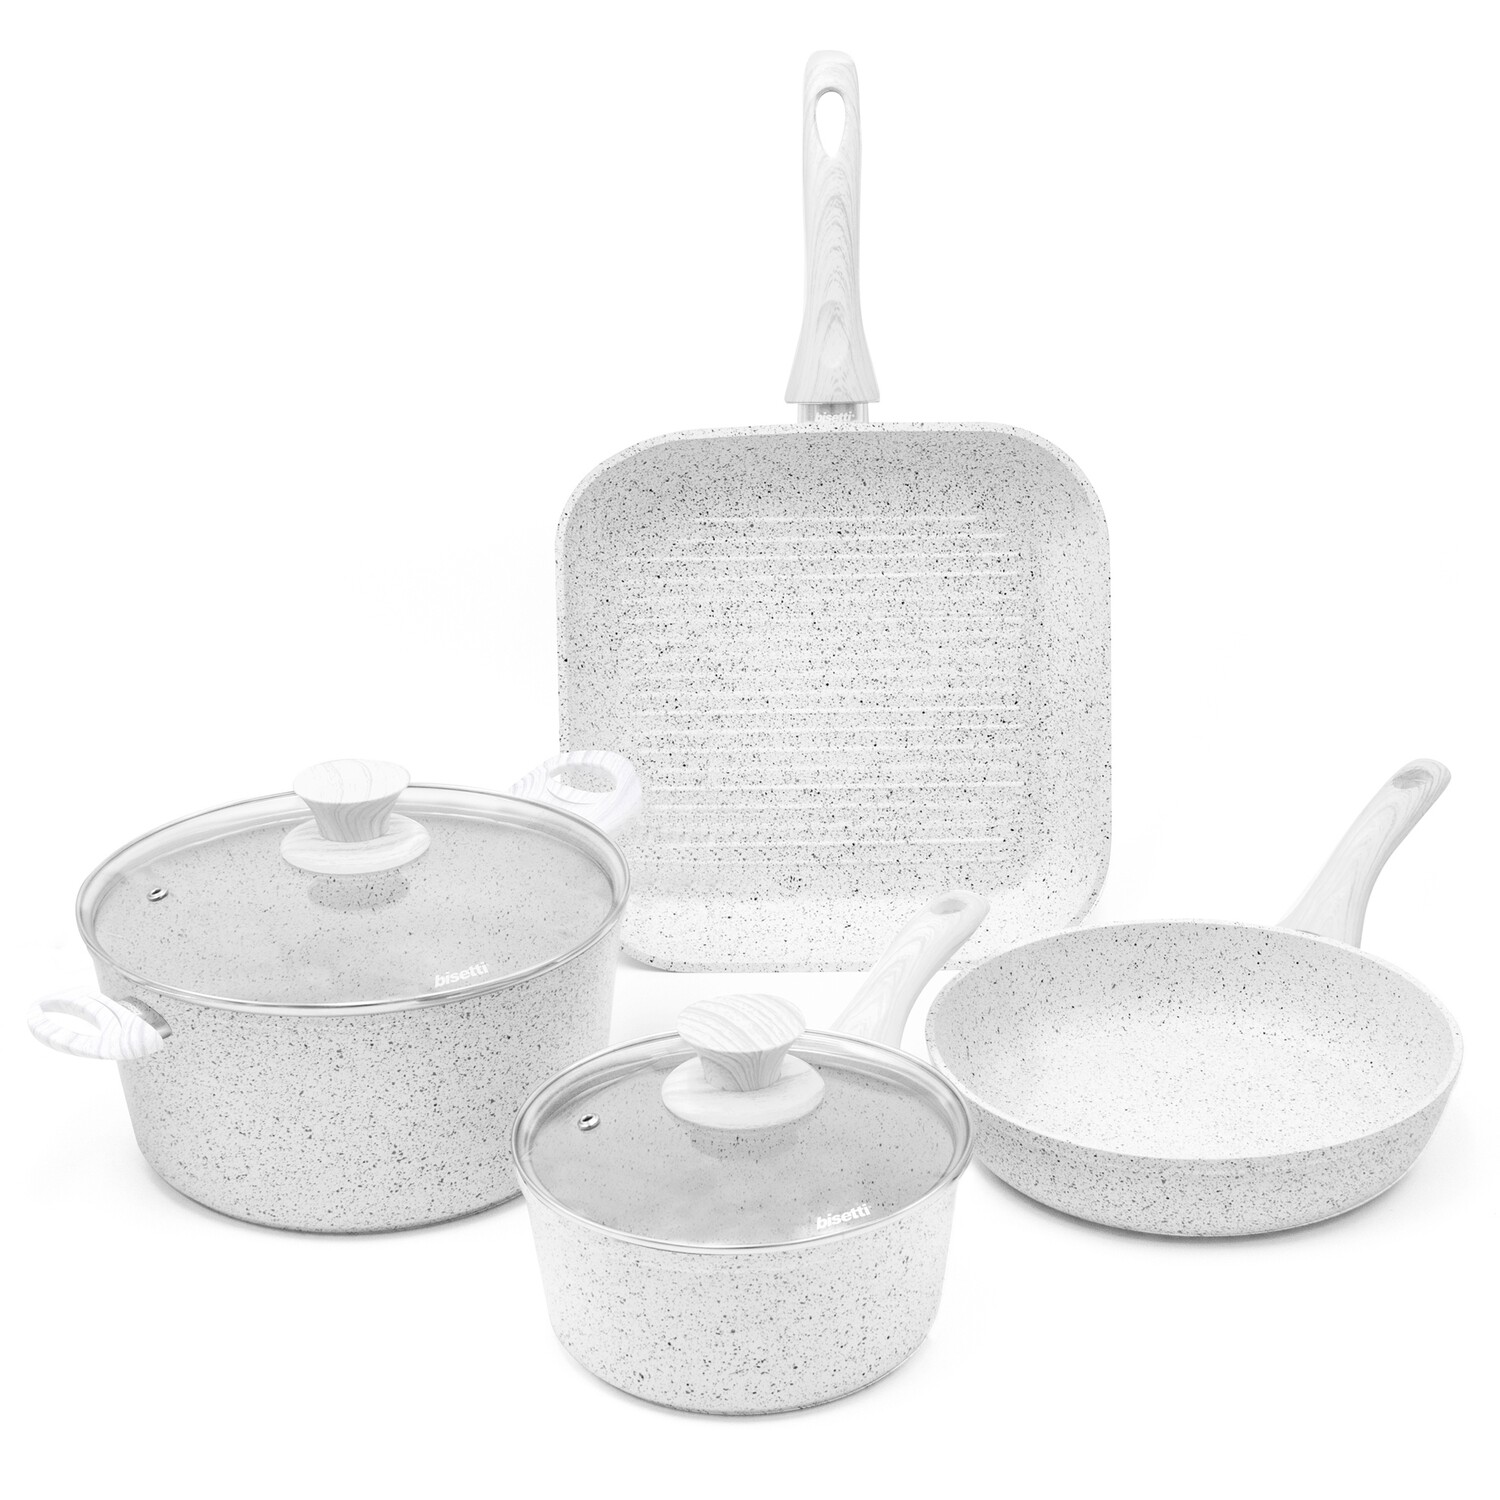 6 pieces cookware set 'Stonewhite' white wood colour handles